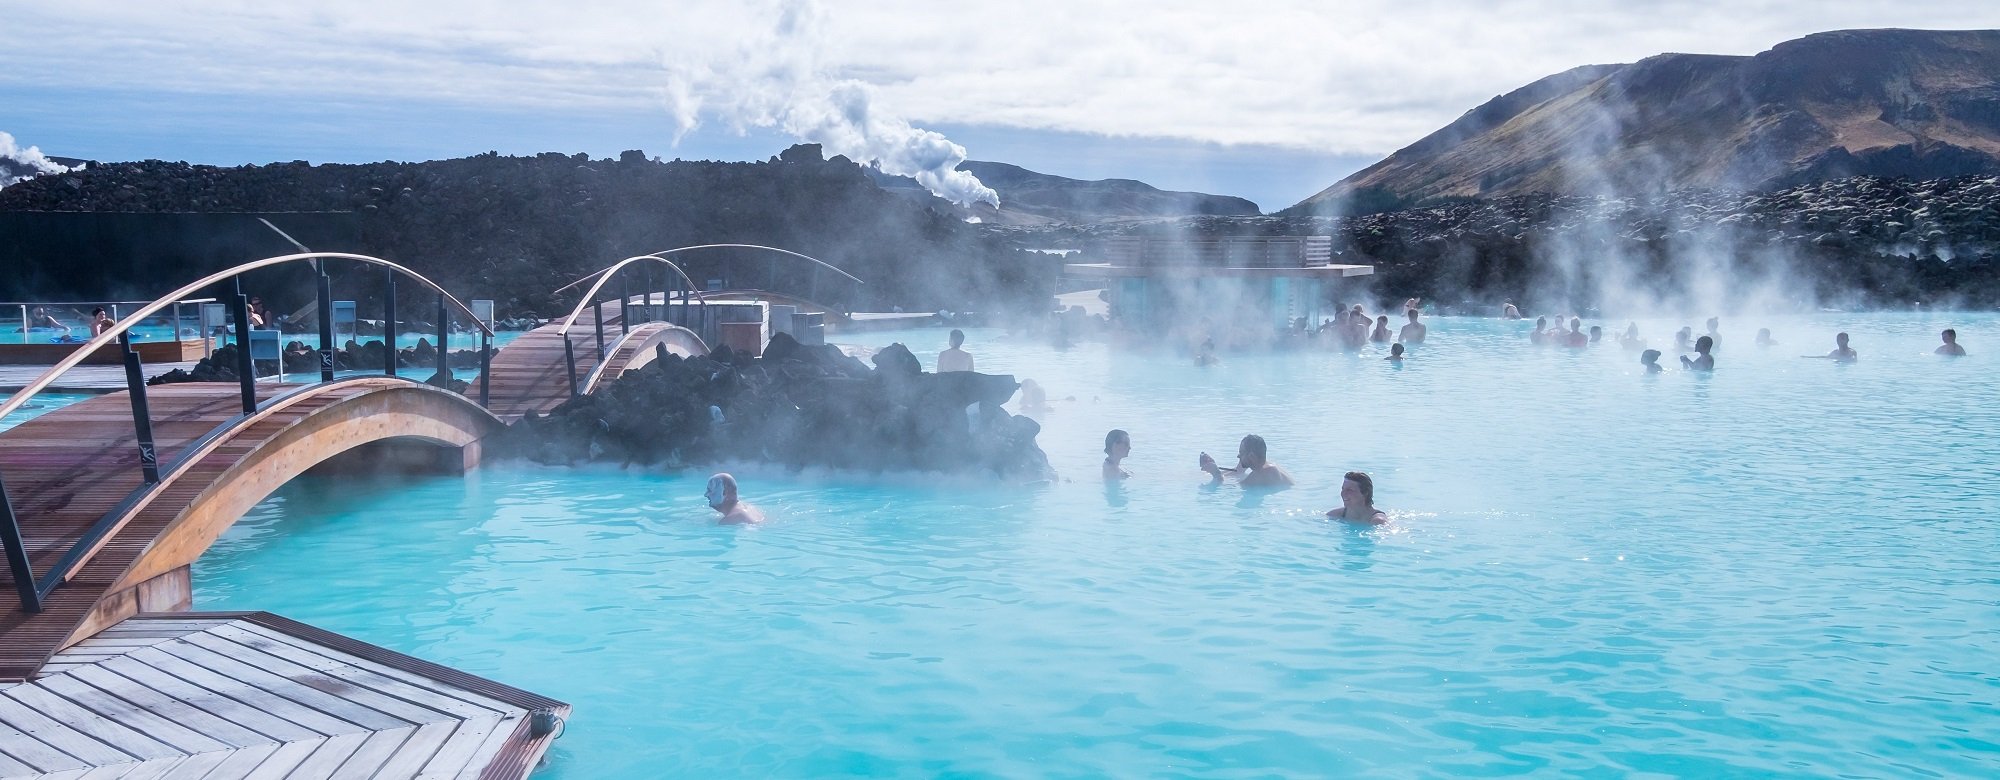 Blog - Hot Springs - Iceland